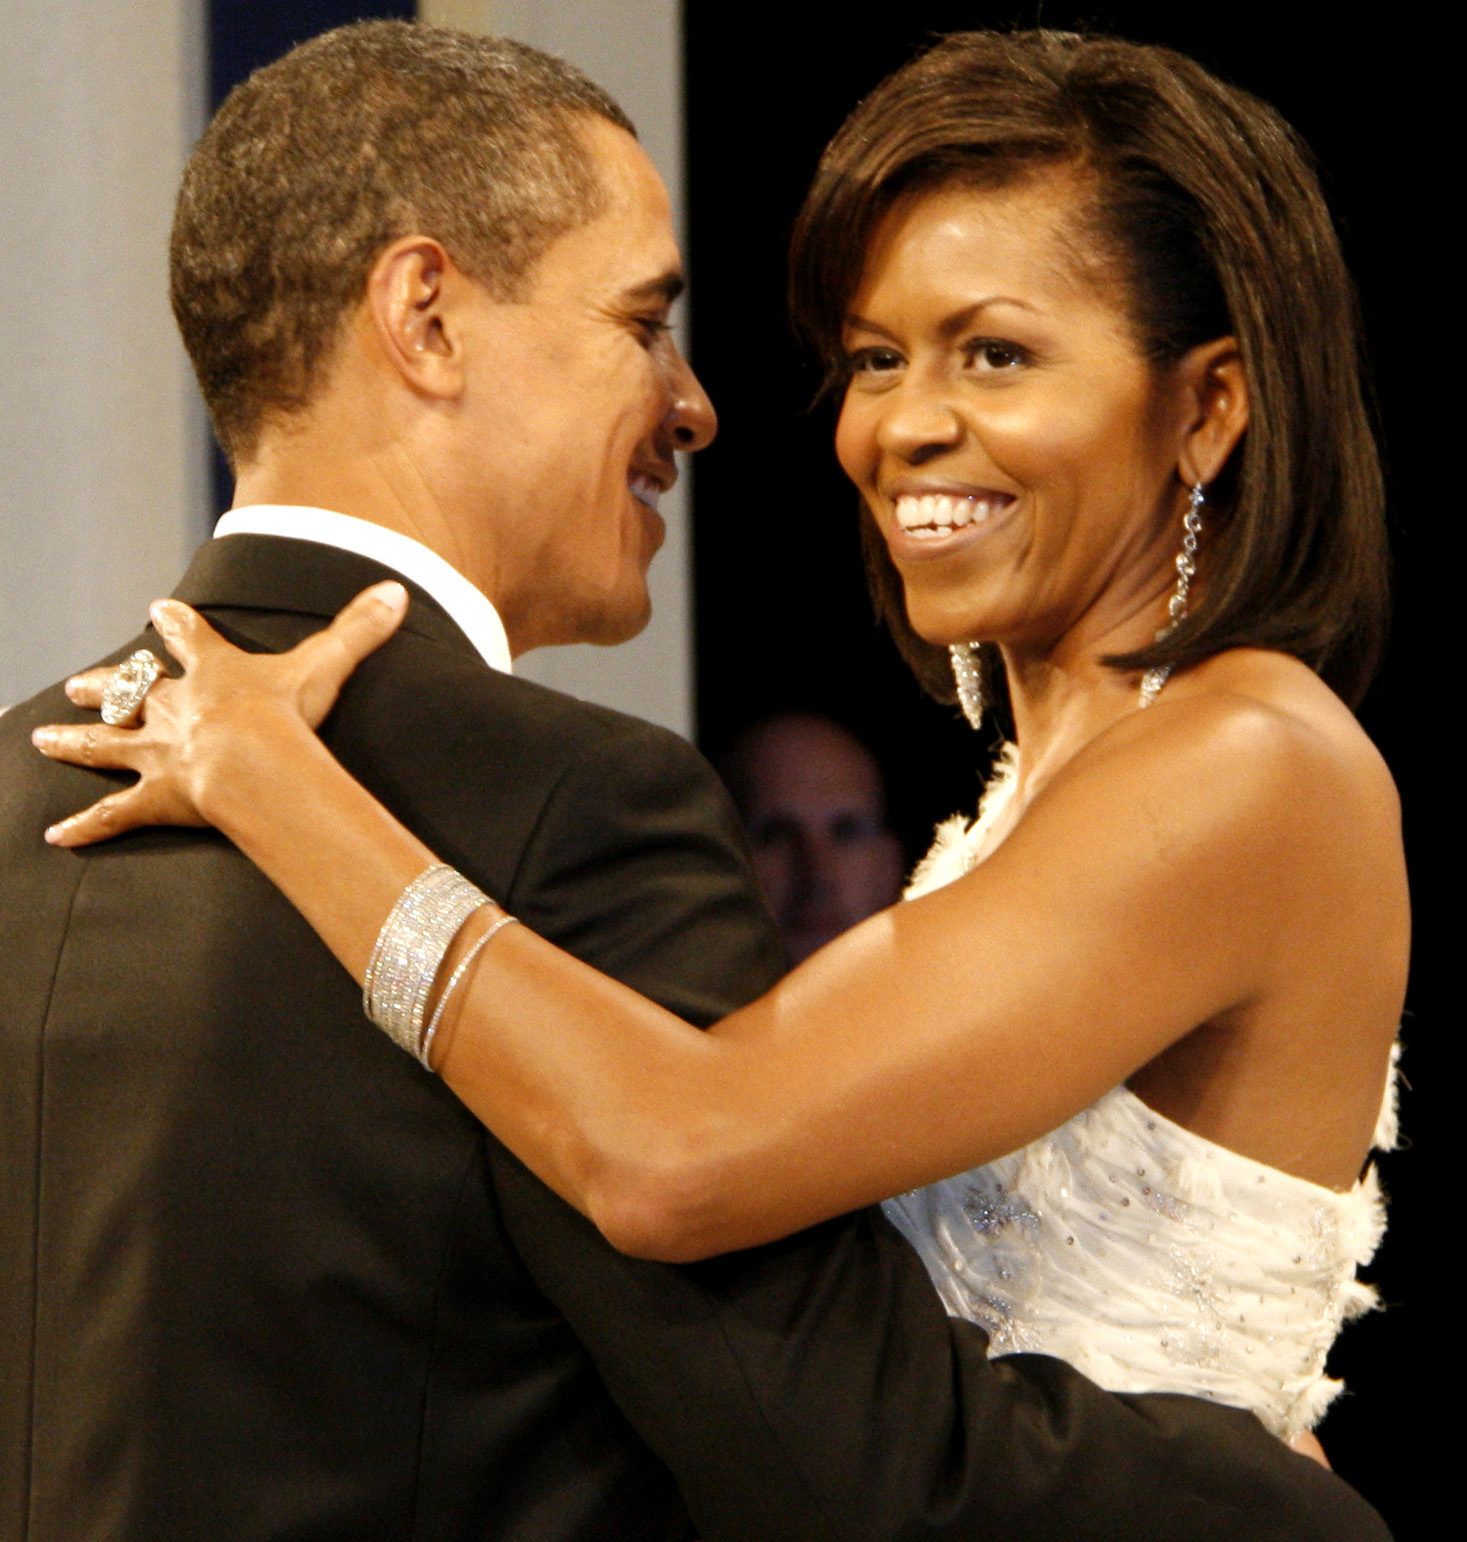 http://2.bp.blogspot.com/-V3HLRd3VHU0/TaCbKxlYPbI/AAAAAAAAAjM/4ndlExwhlqc/s1600/Barack_and_Michelle_Obama_at_the_Home_States_Ball.jpg